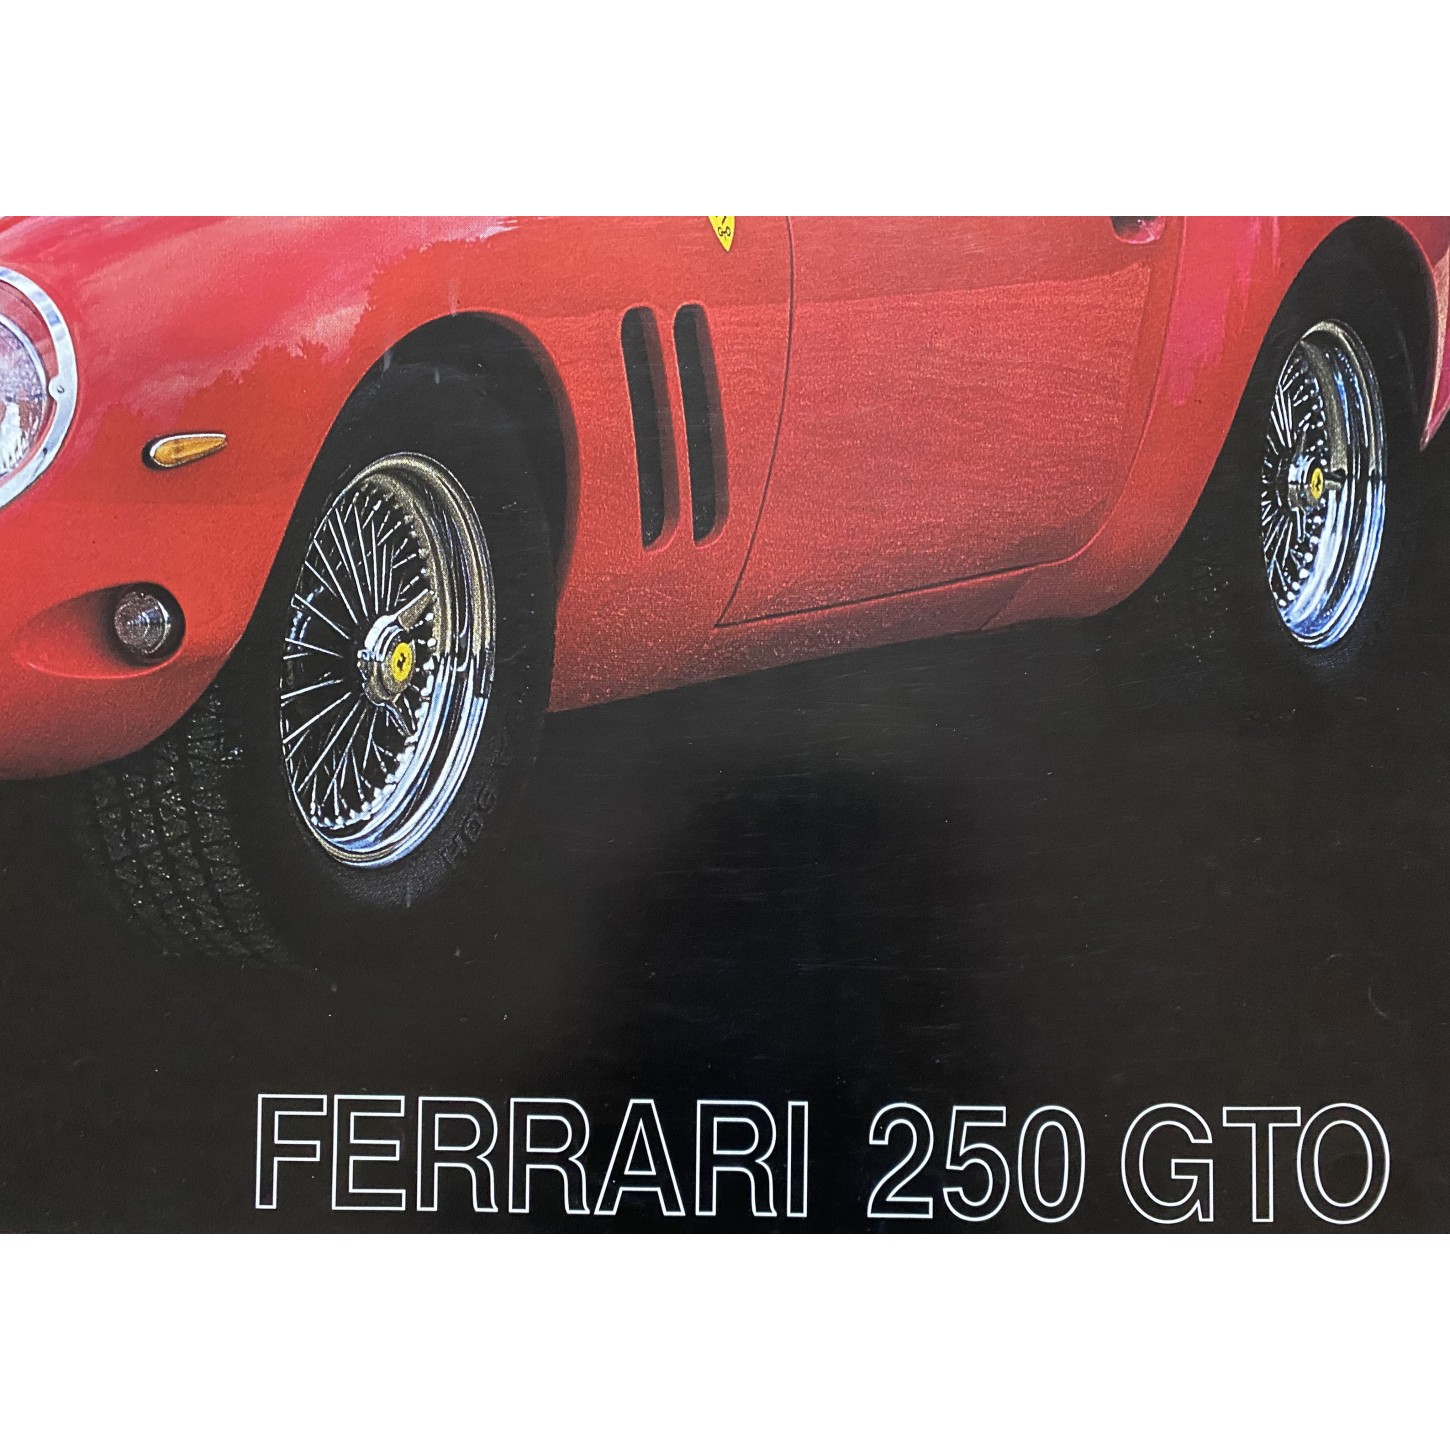 FERRARI 250 GTO Poster Vintage Anni 80 - 94X62 CM - GoPoster